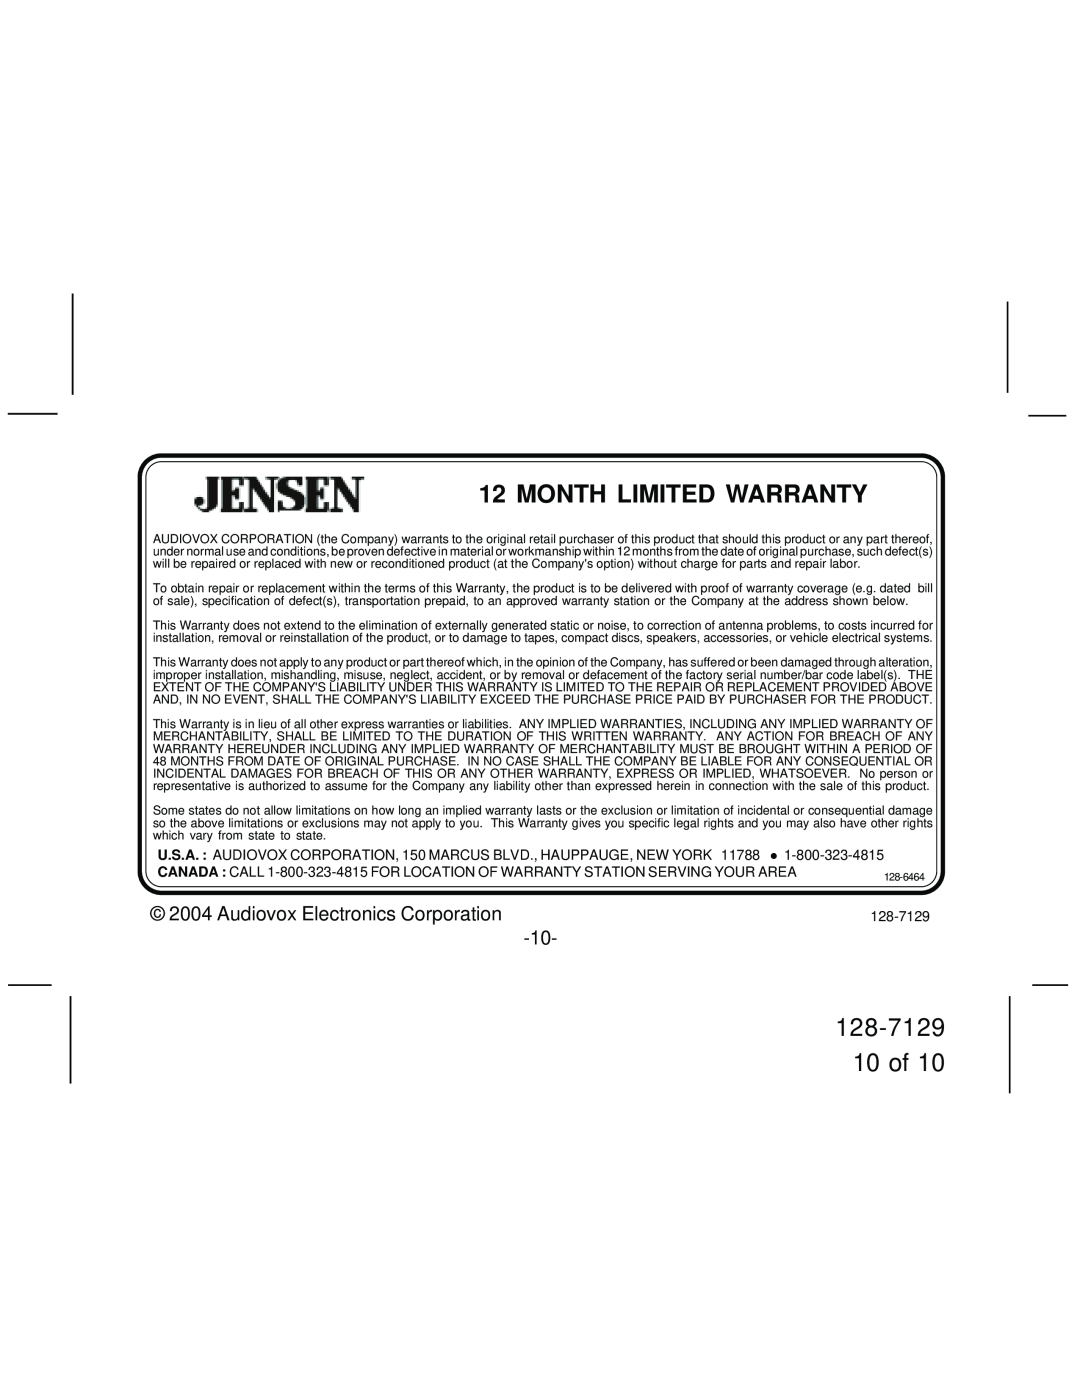 Sirius Satellite Radio JHK1 manual 128-7129 10 of, Month Limited Warranty 